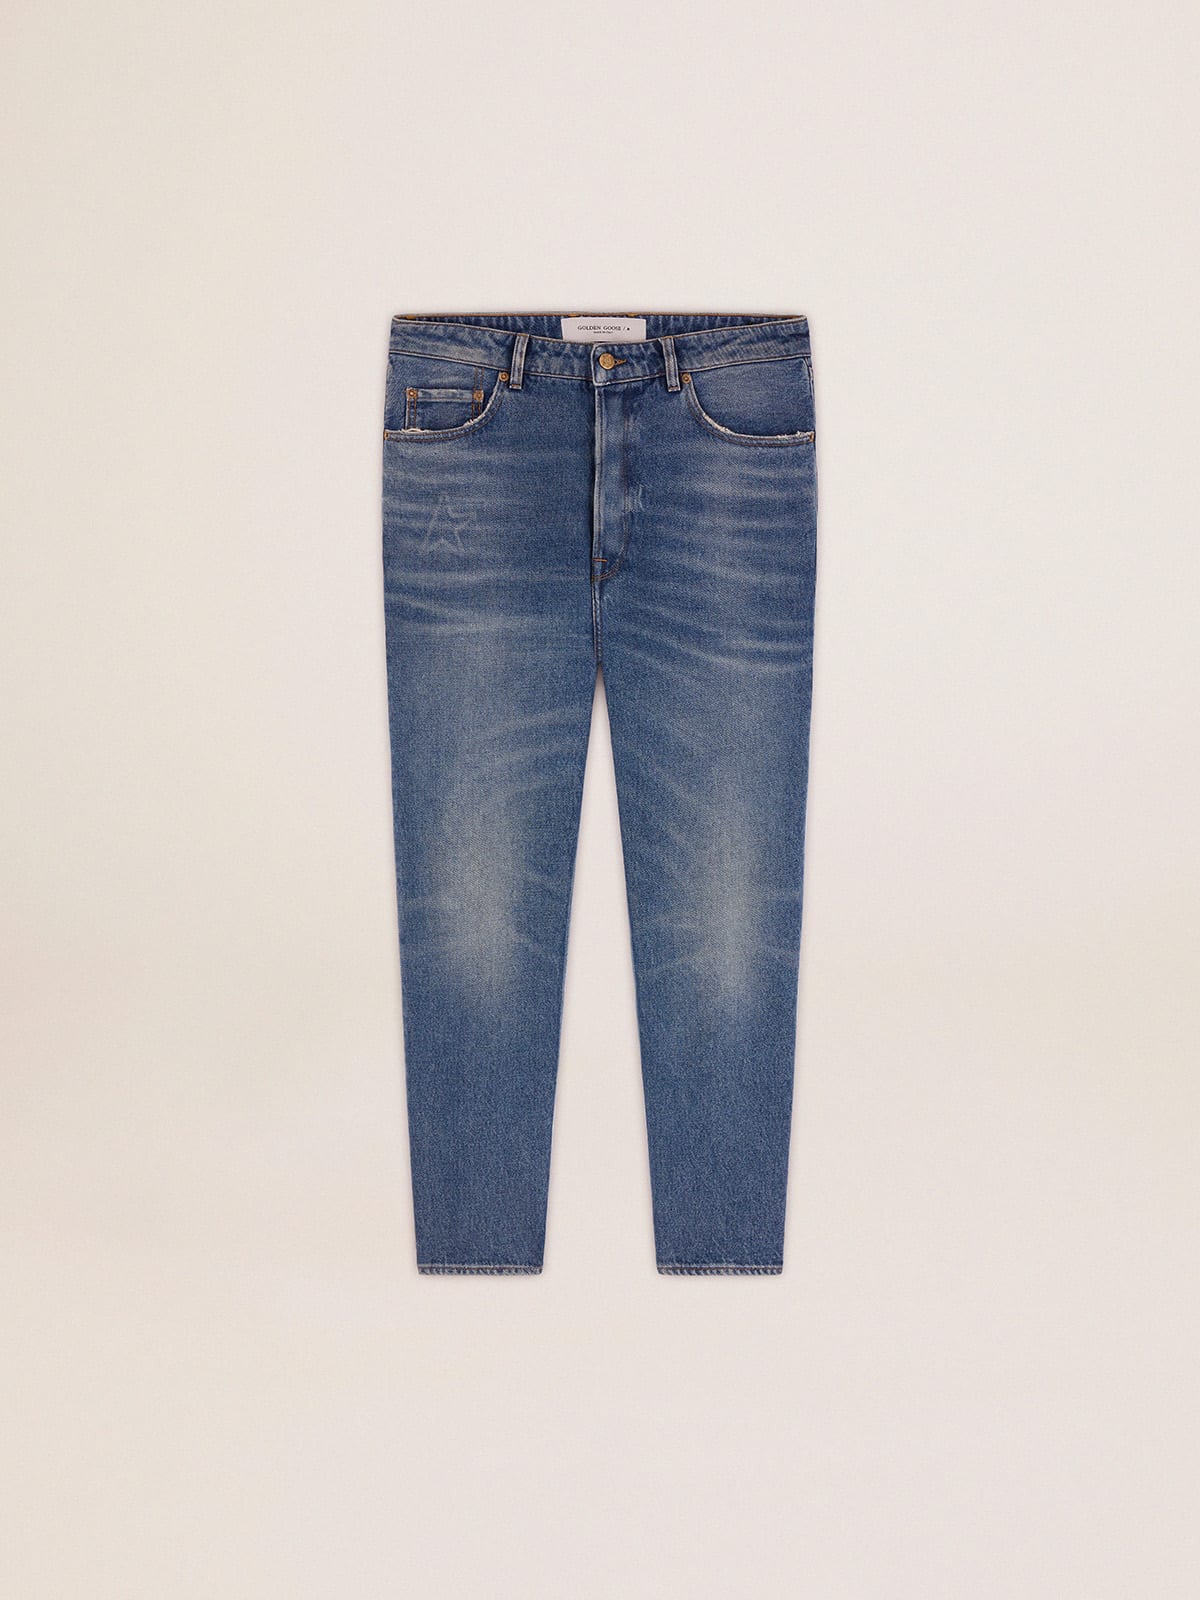 Golden Goose - Men's slim fit jeans with medium wash in 